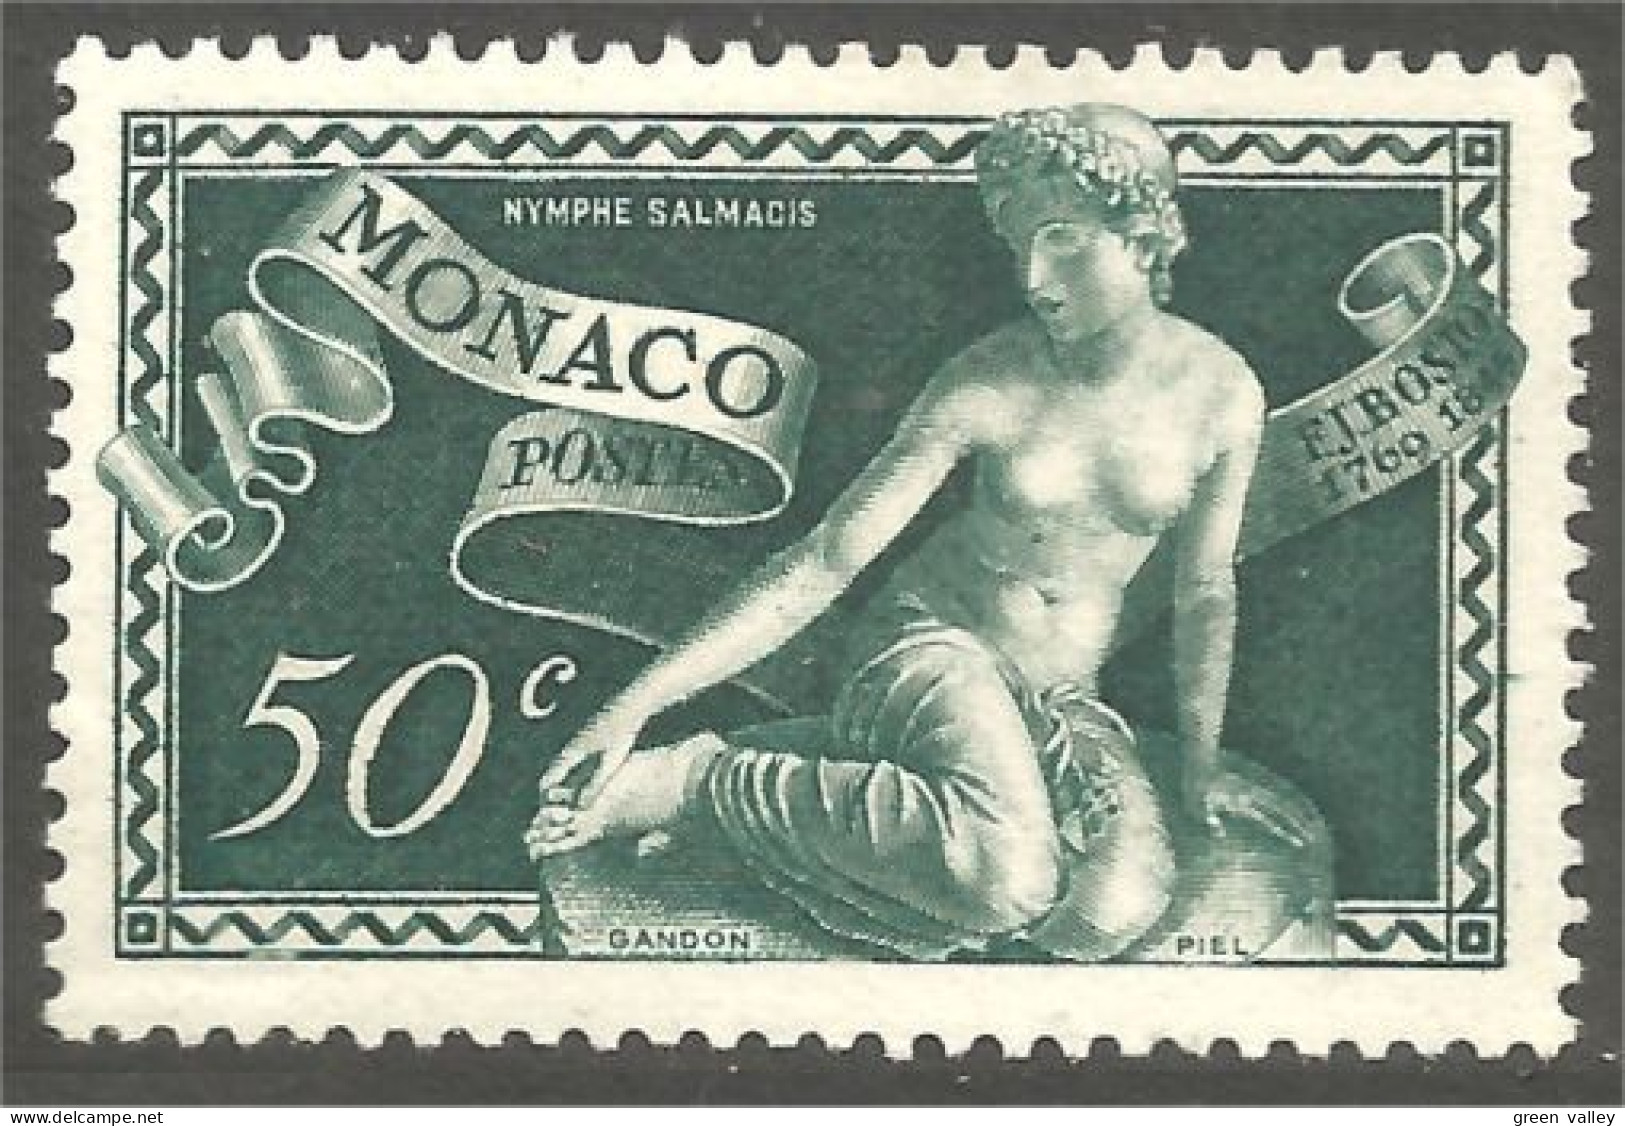 630x Monaco Nymphe Salmacis Bosio Sulpture Statue Nude MH * Neuf (MON-949) - Mythologie